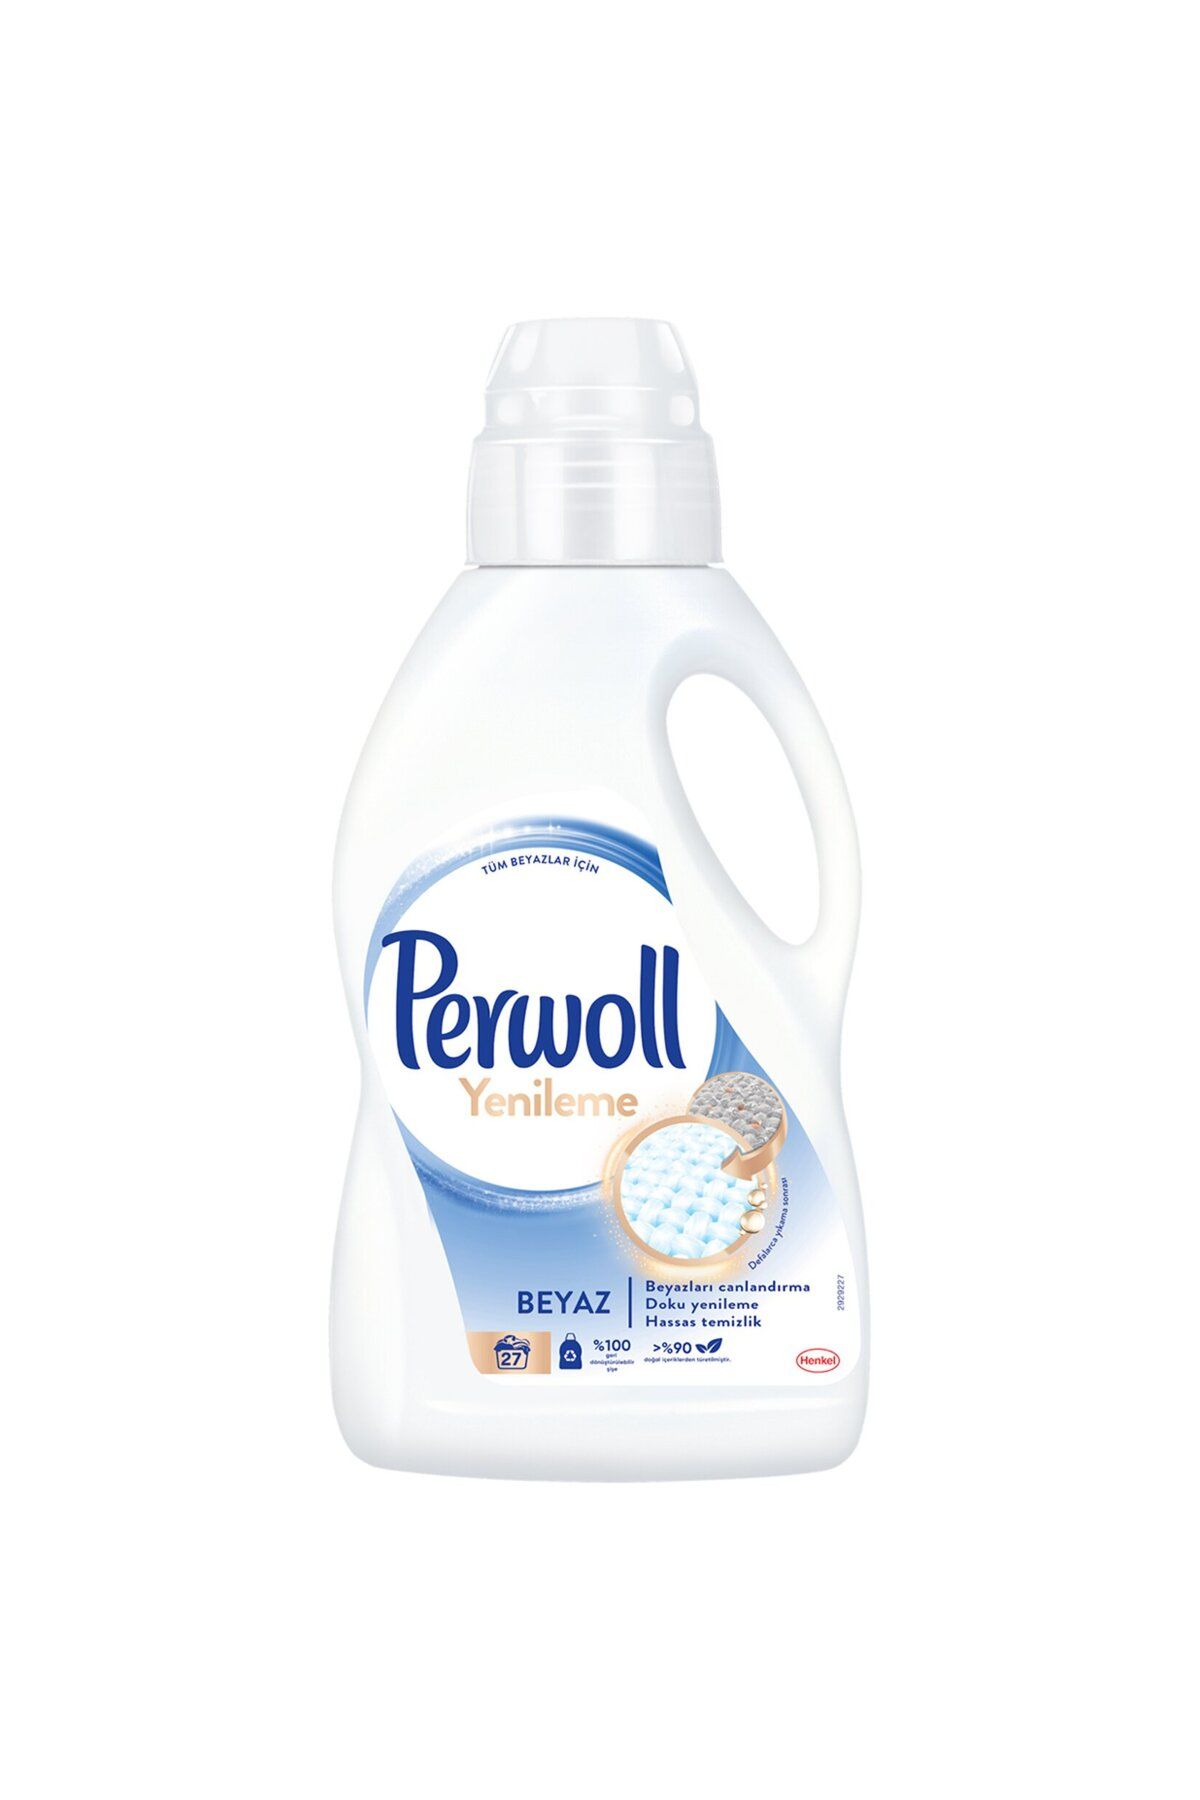 Perwoll Geliştirilmiş Beyaz Sıvı Deterjan 27 Yıkama 1.485ml